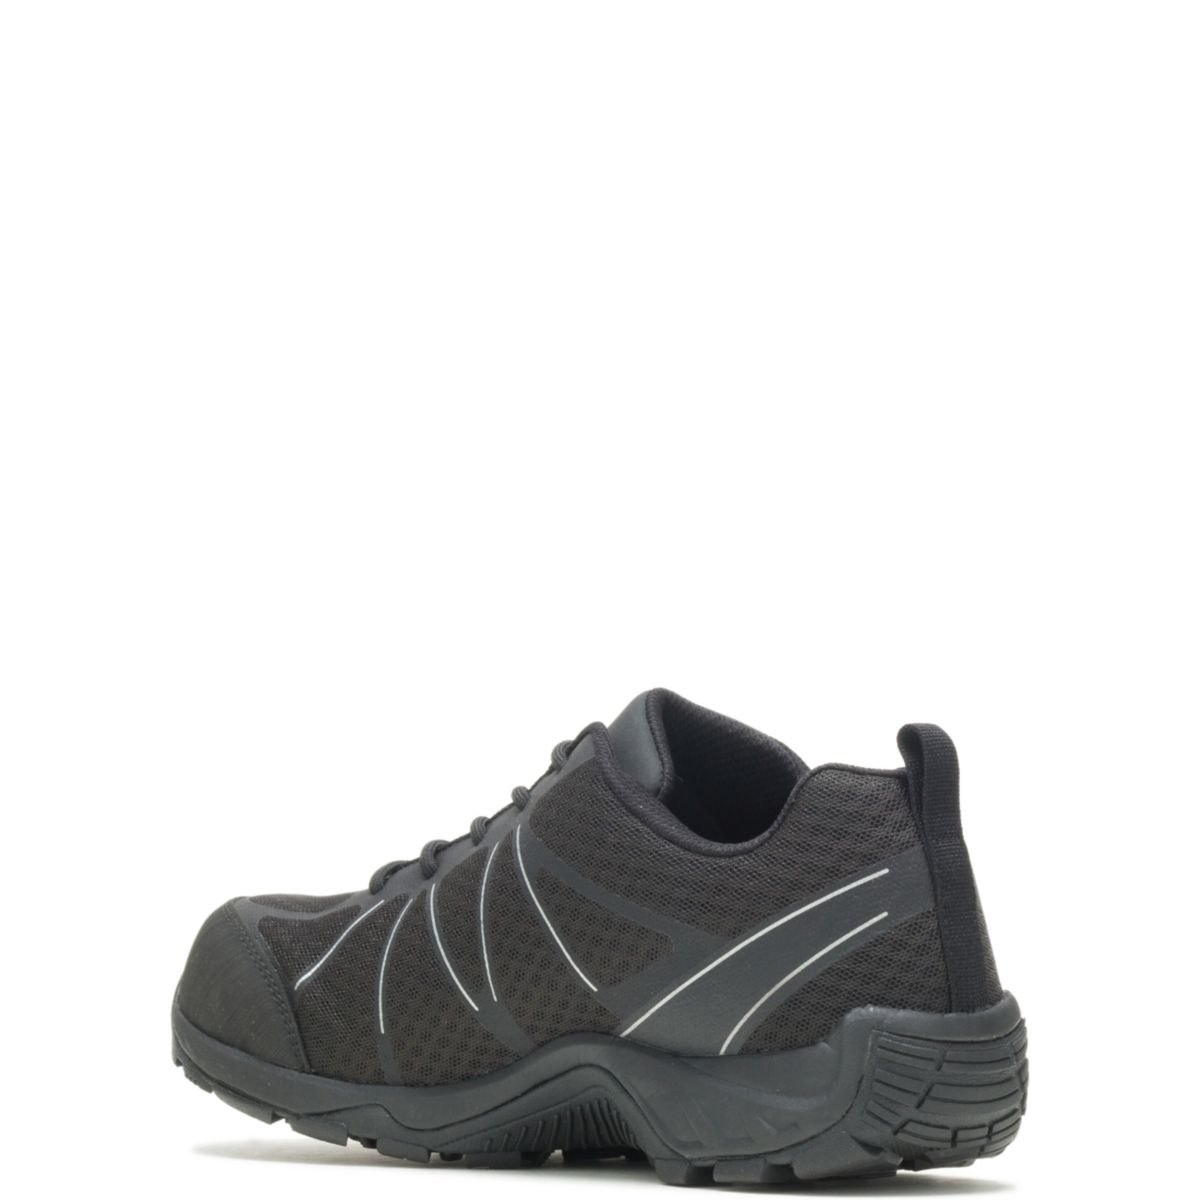 WOLVERINE Men's Amherst II CarbonMAXÂ® Composite Toe Work Shoe Black - W201147 BLACK - BLACK, 13